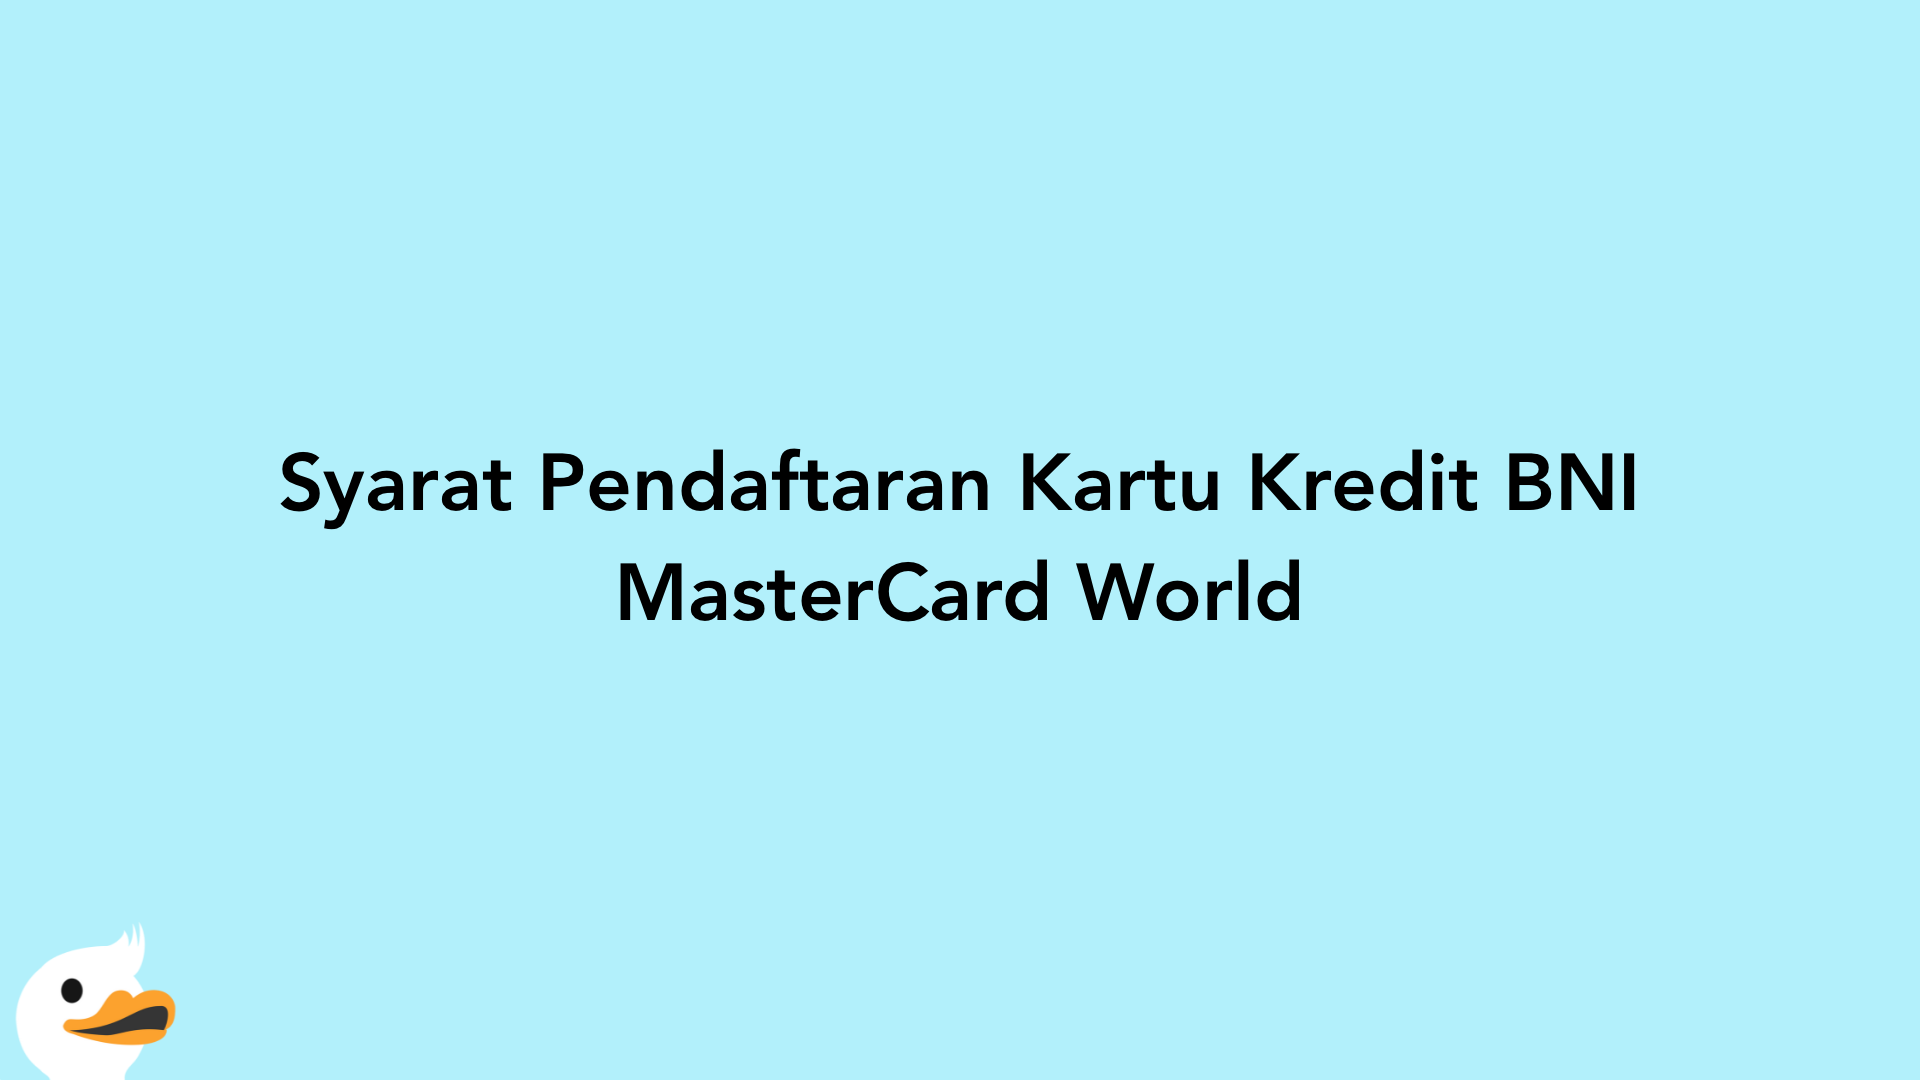 Syarat Pendaftaran Kartu Kredit BNI MasterCard World